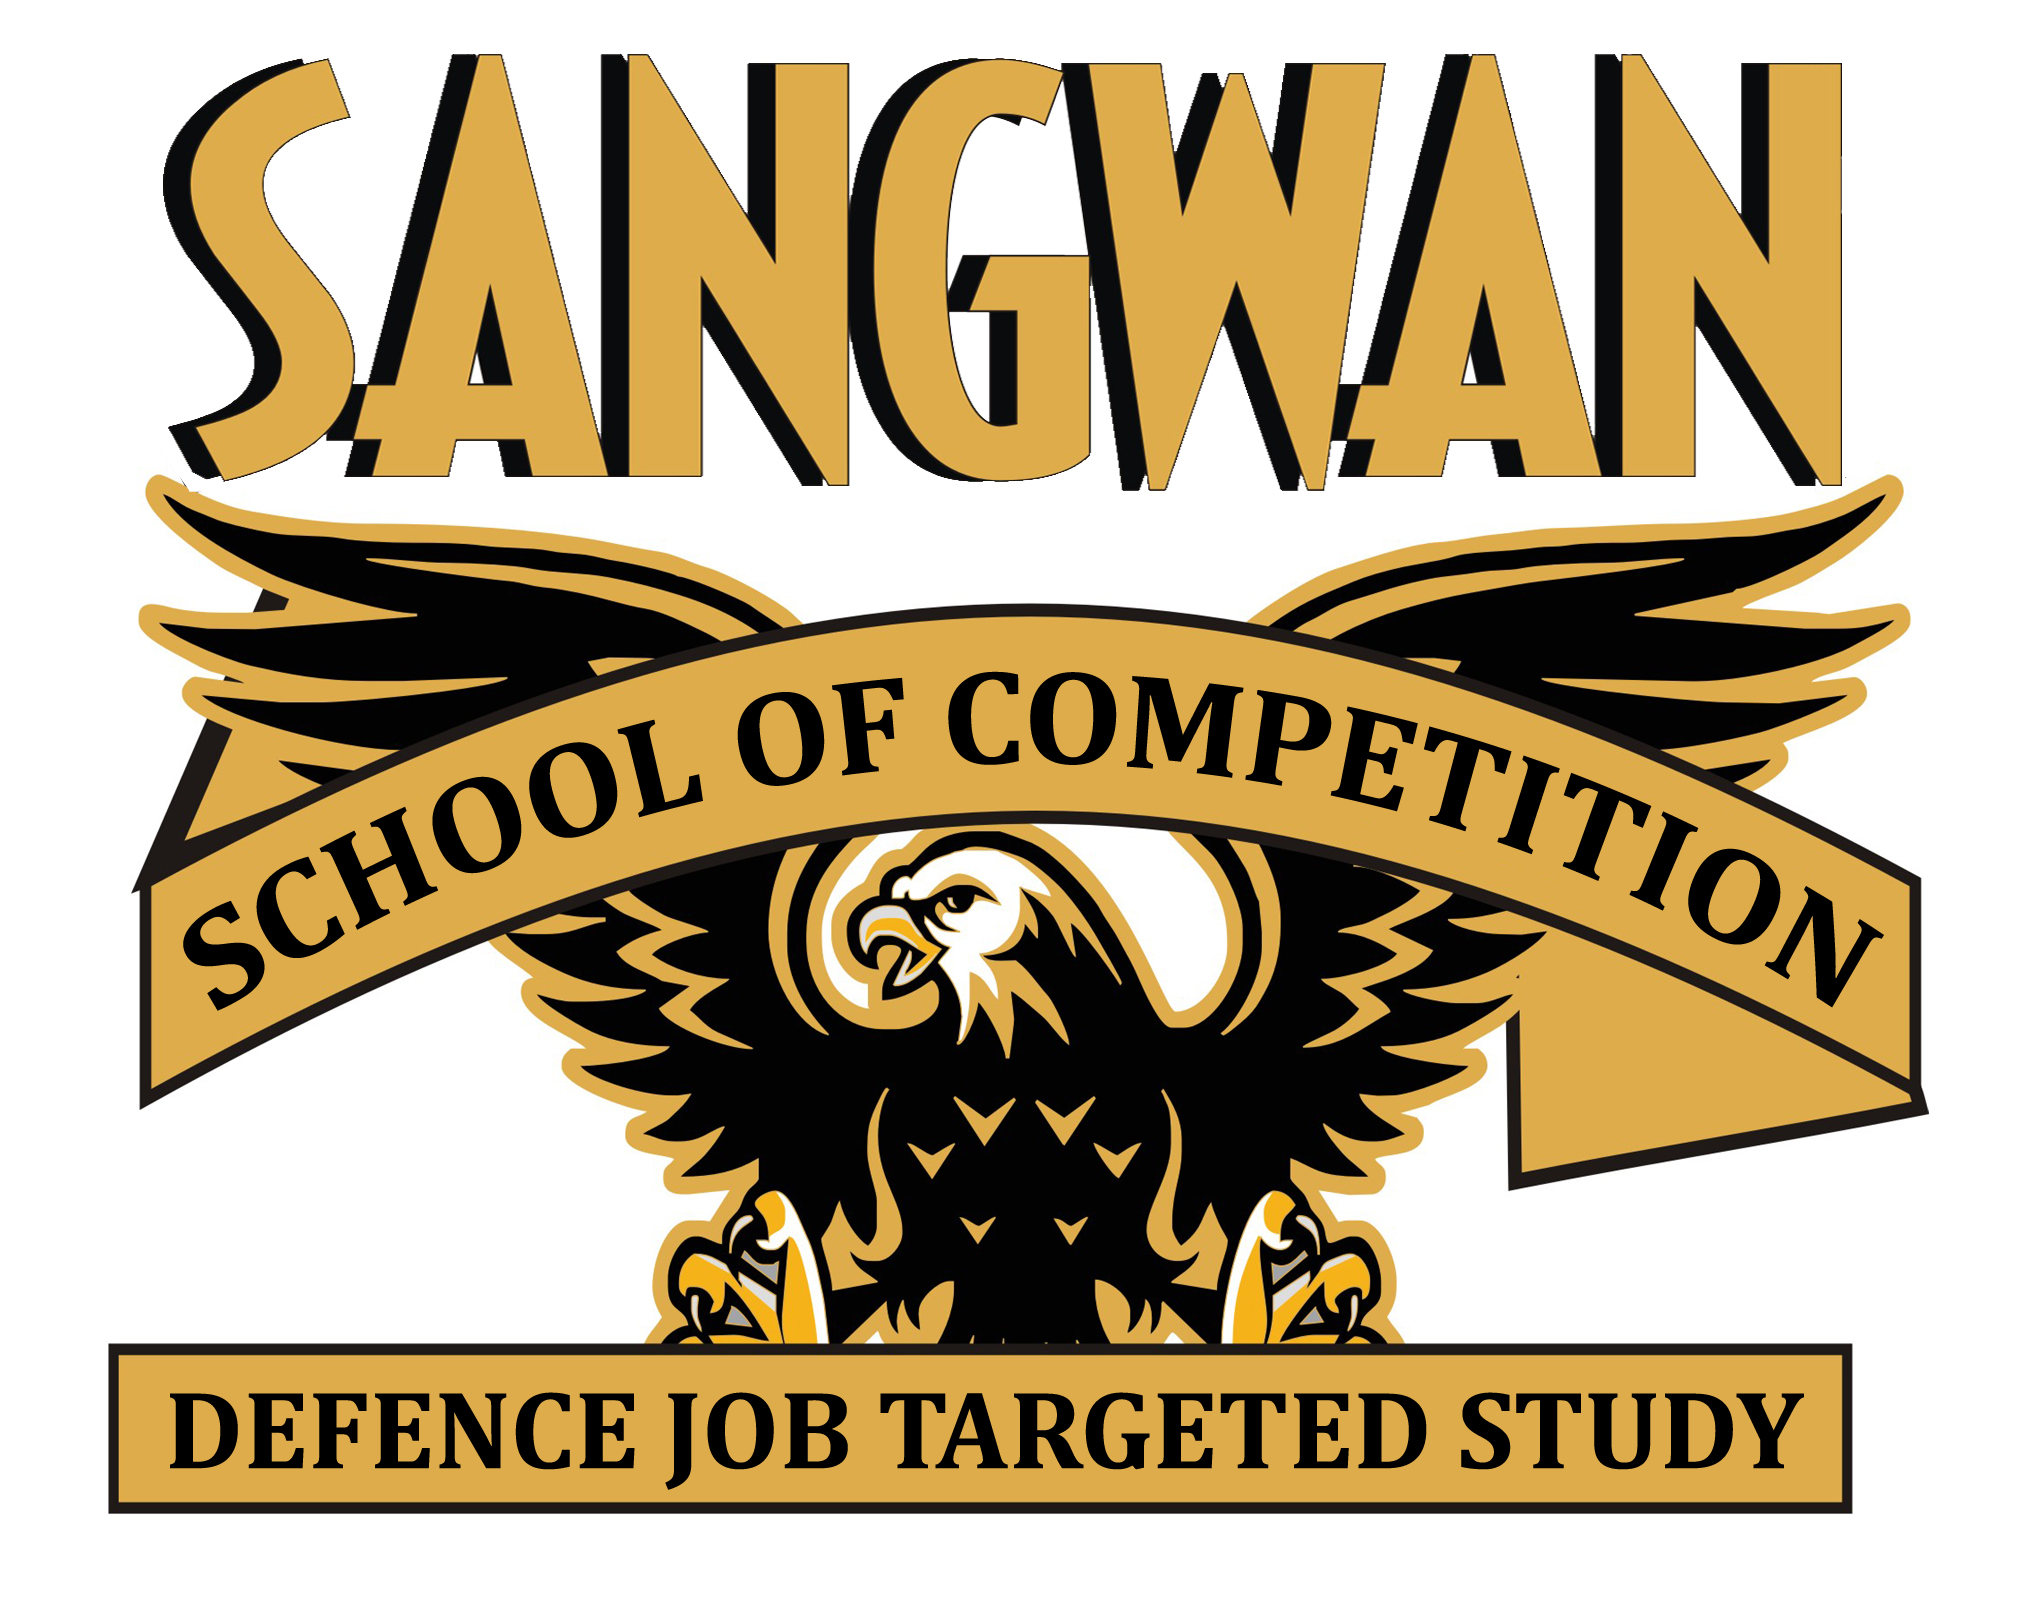 Sangwan School|Schools|Education